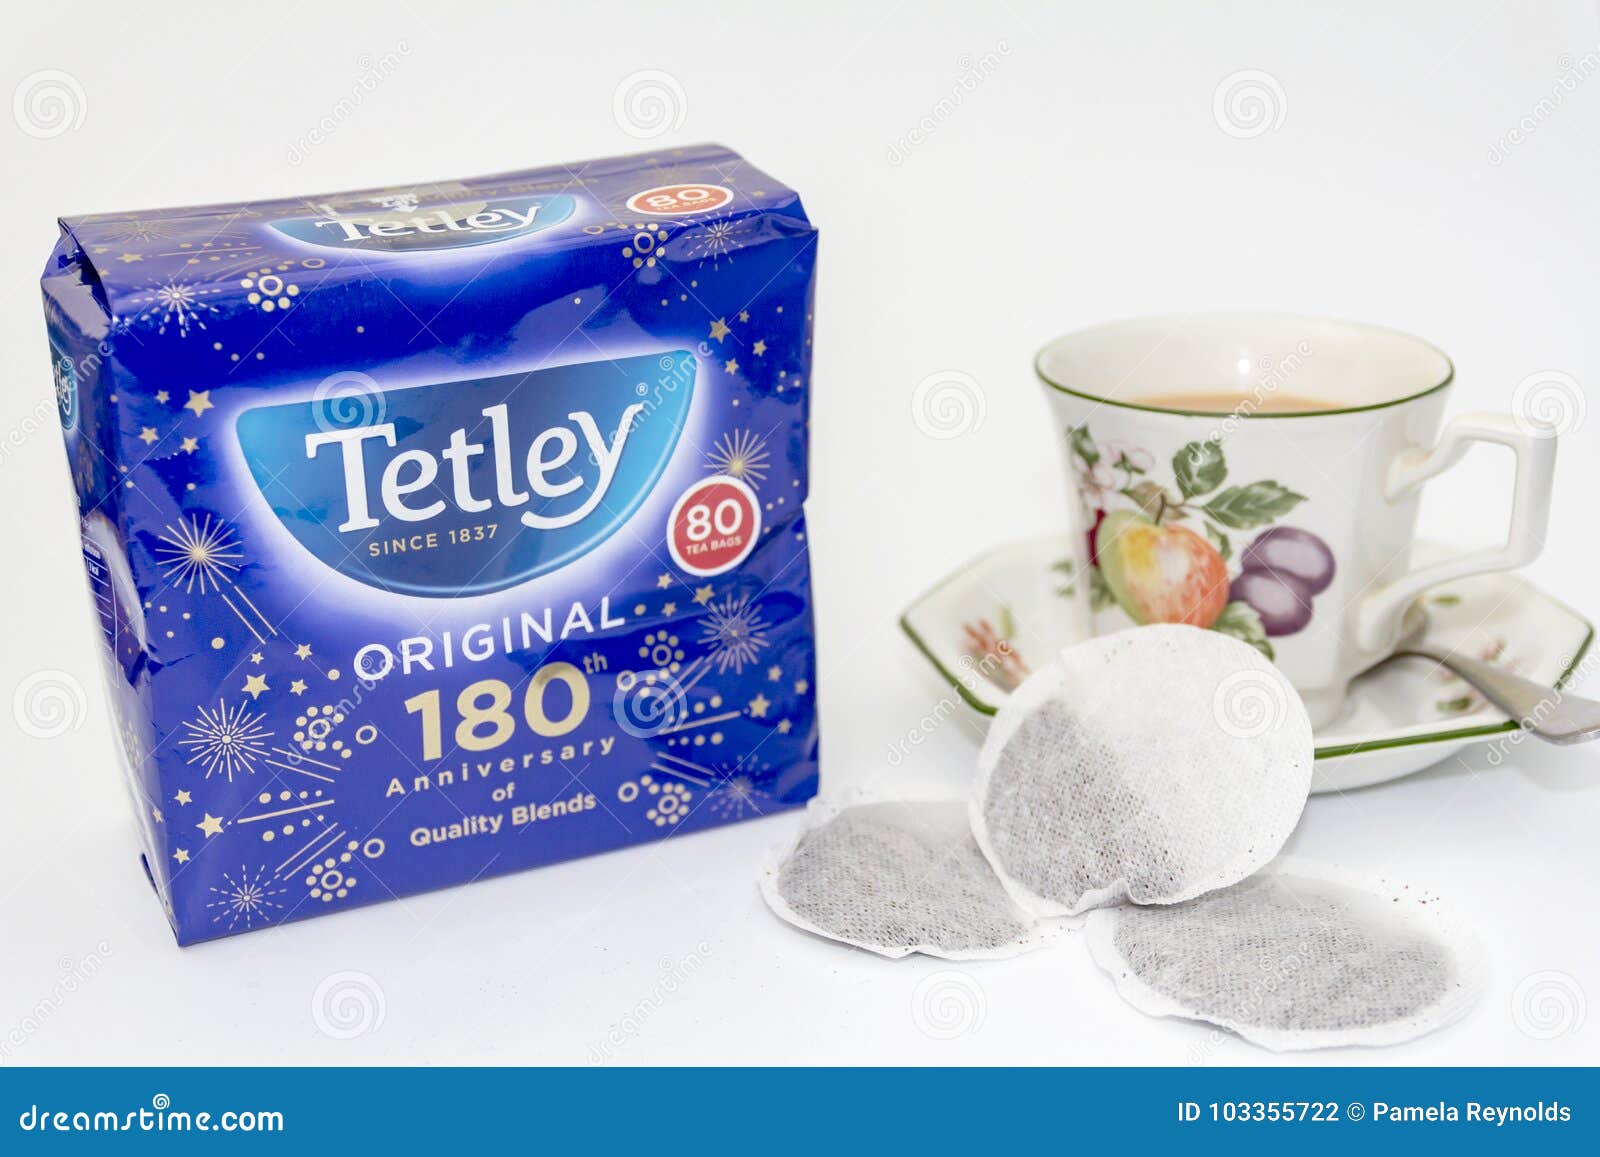 Tetley tea bags